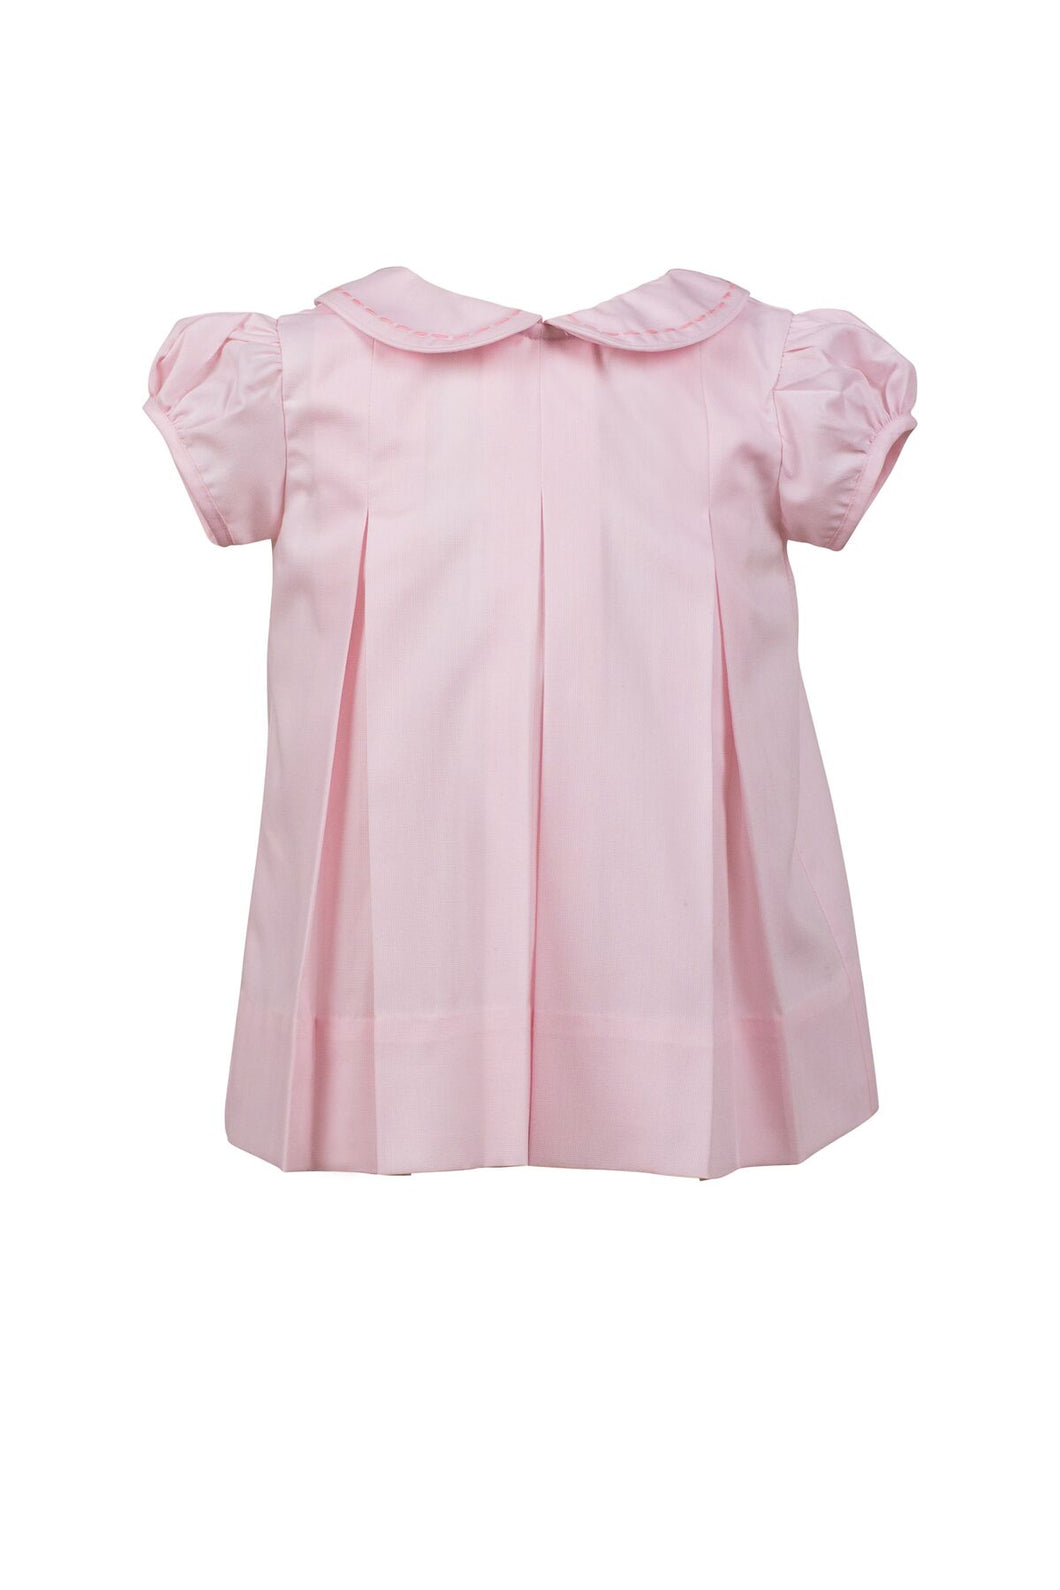 Classic Peony Pleat Dress - Pink w/ Pink